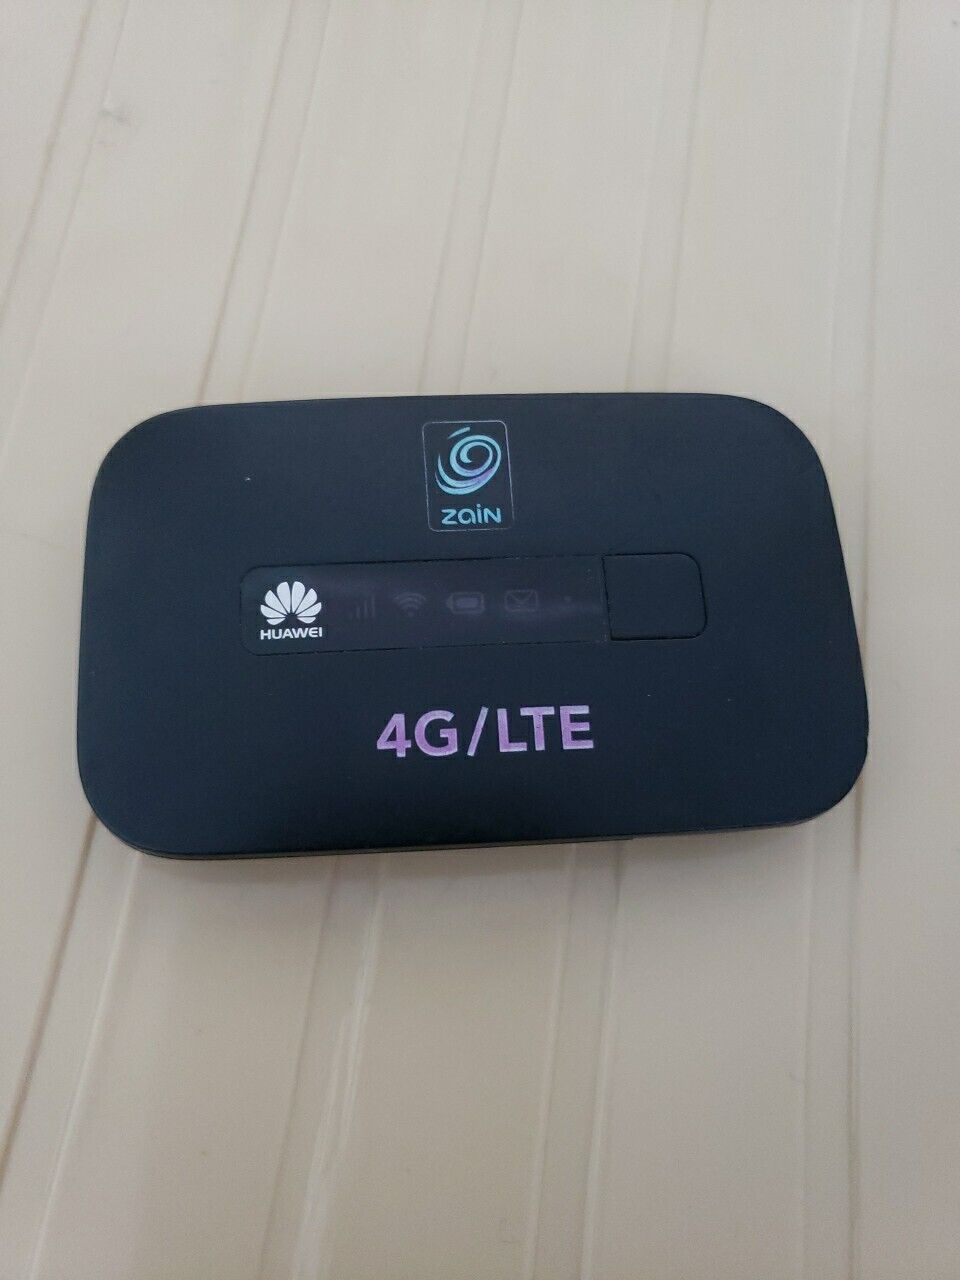 Huawei E5373s-155 OEM Unlocked 4G Lte Wifi Router Mobile Hotspot Wireless 